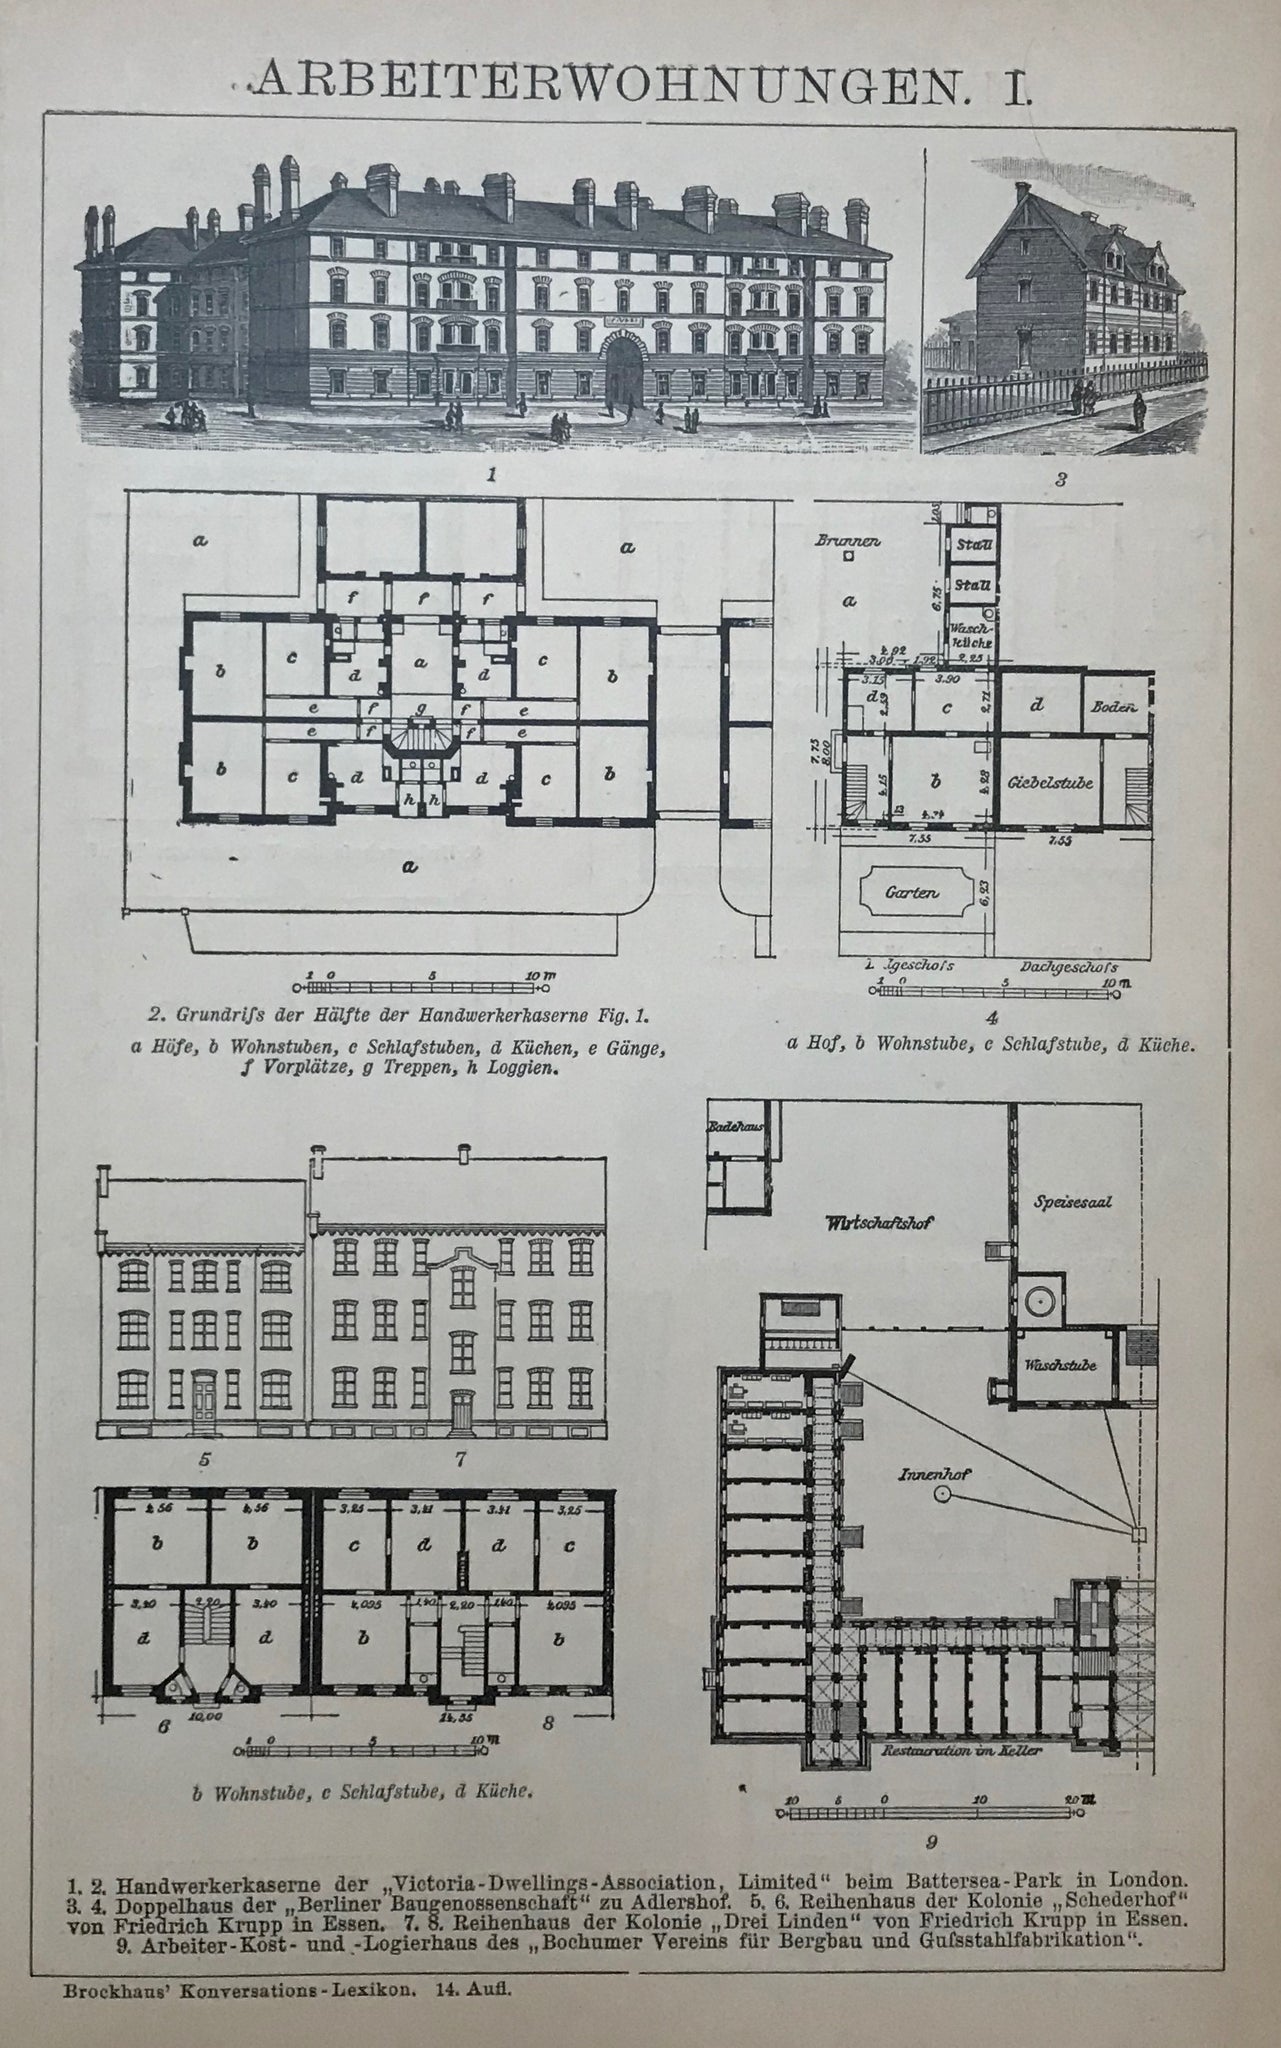 "Arbeiterwohnungen II"  Wood engravings showing various models of appartments for workers.  Krupp, Victoria-Dwellings-Association, Battersea Park et al.